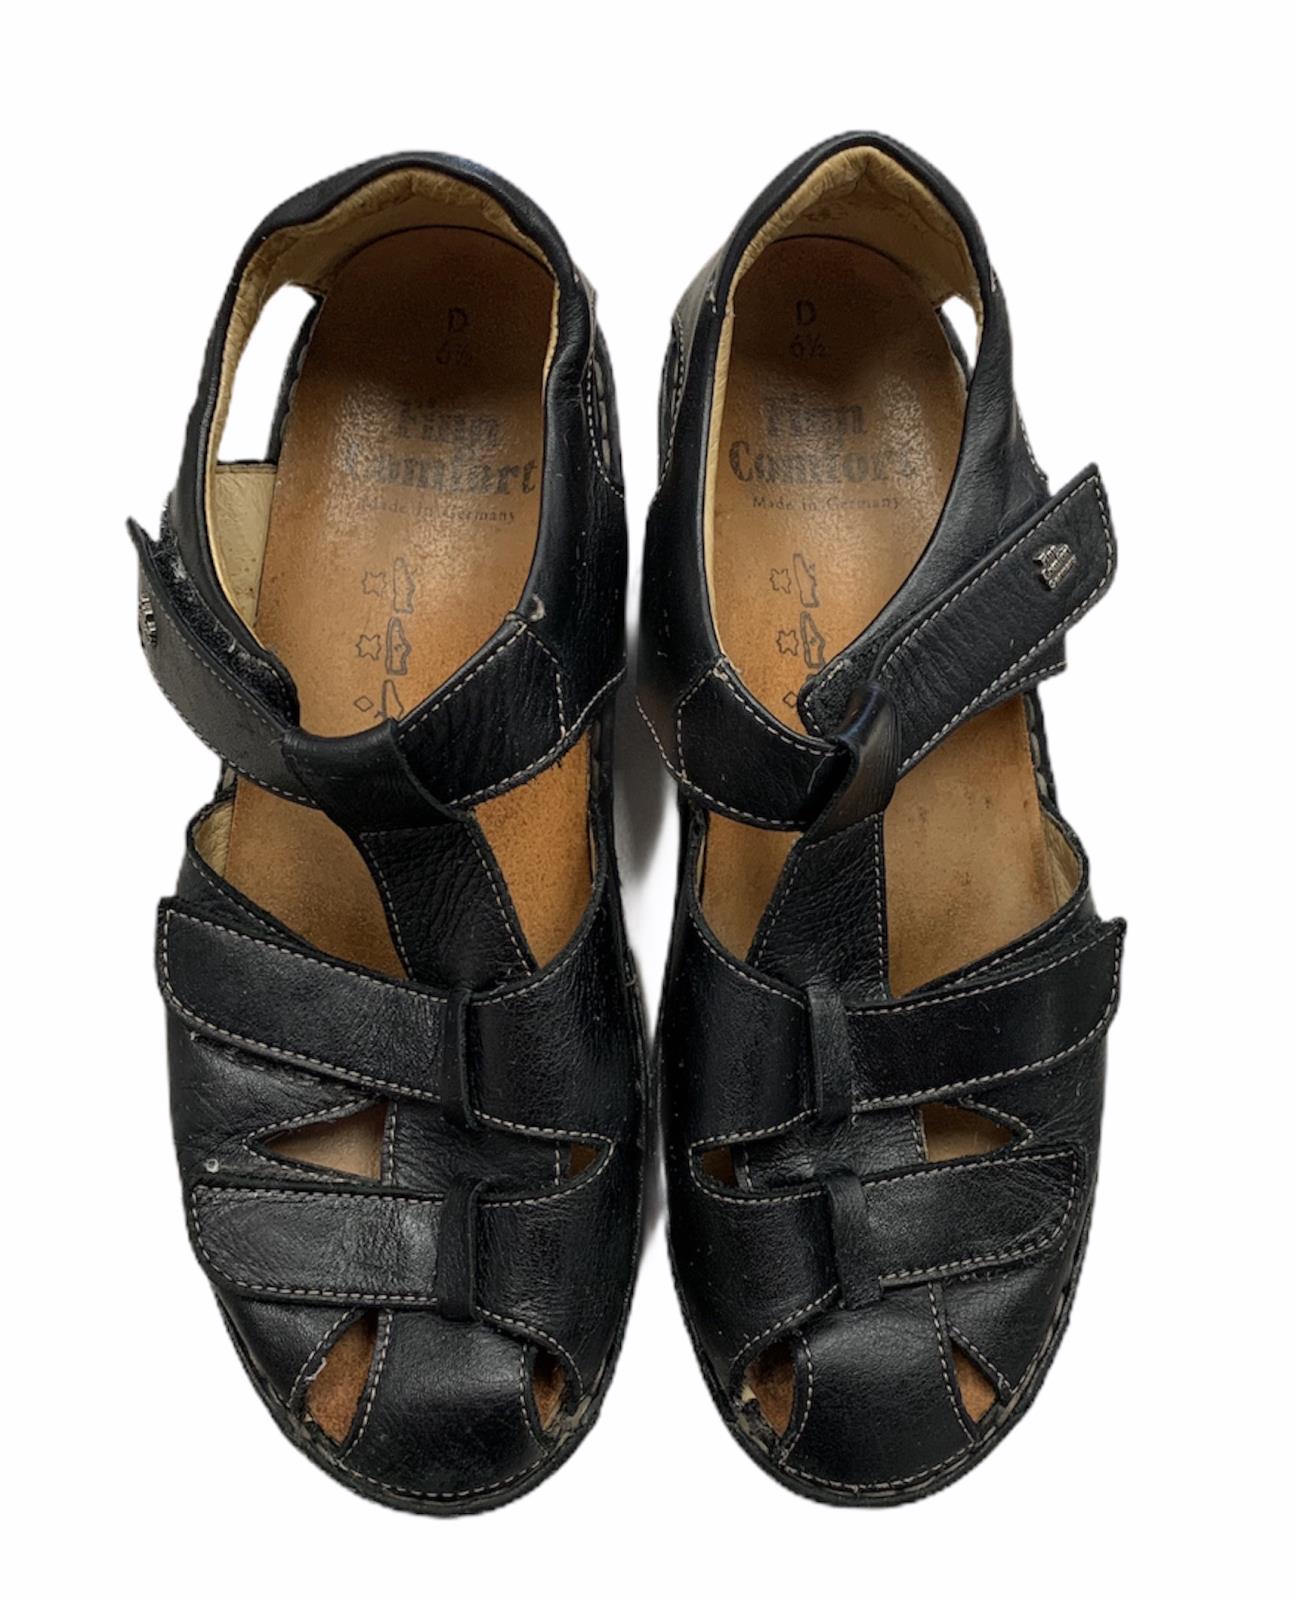 Finn Comfort Closed Toe Sandals FÜNEN Black Leather Comfort Adjustable ...